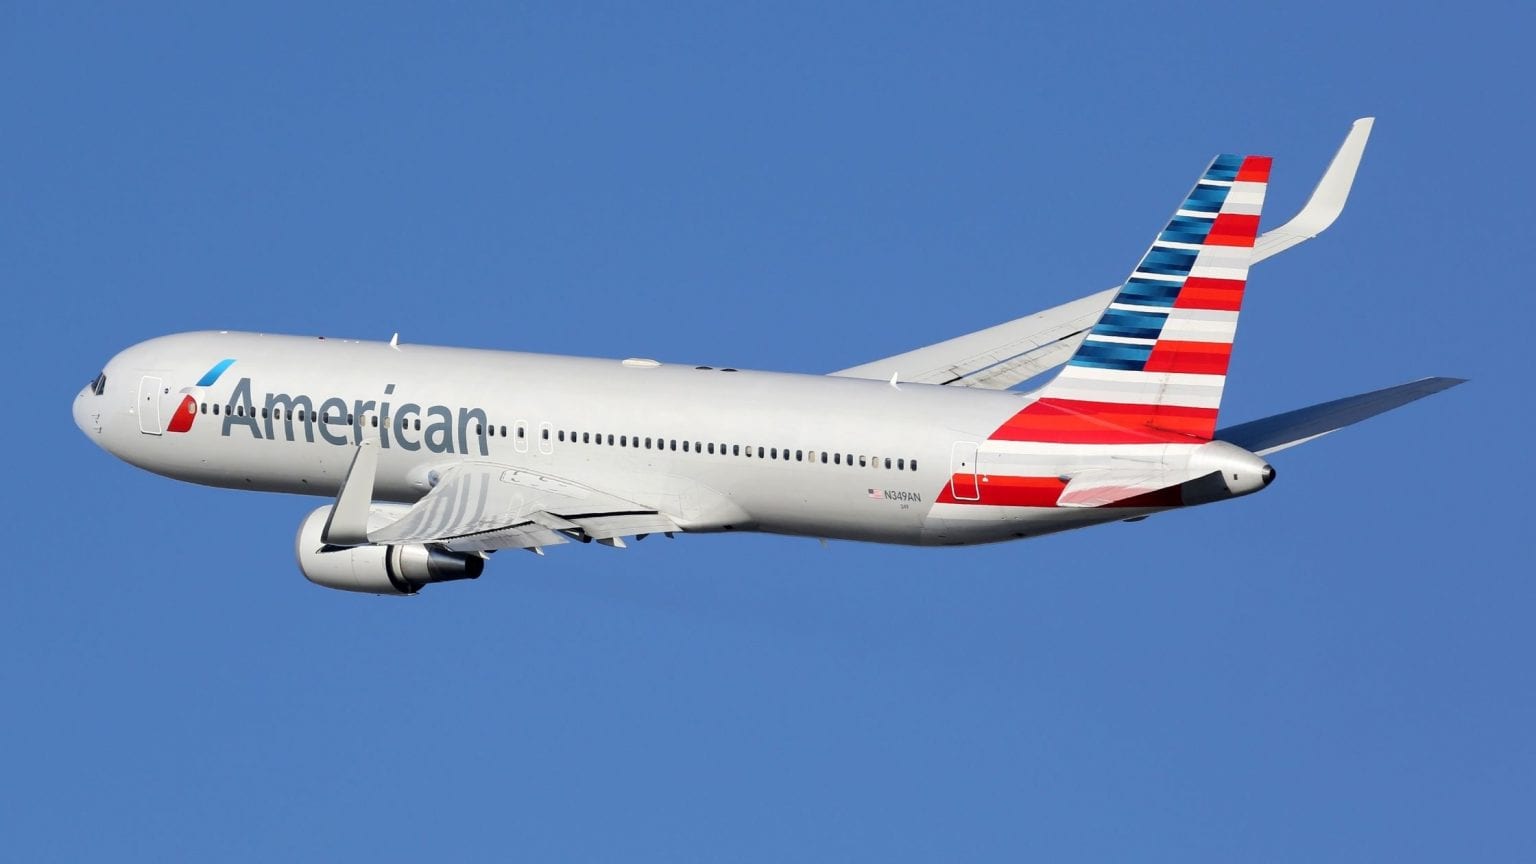 American Airlines (AAL) Earnings Call Transcript Q4 2020 Rev Blog